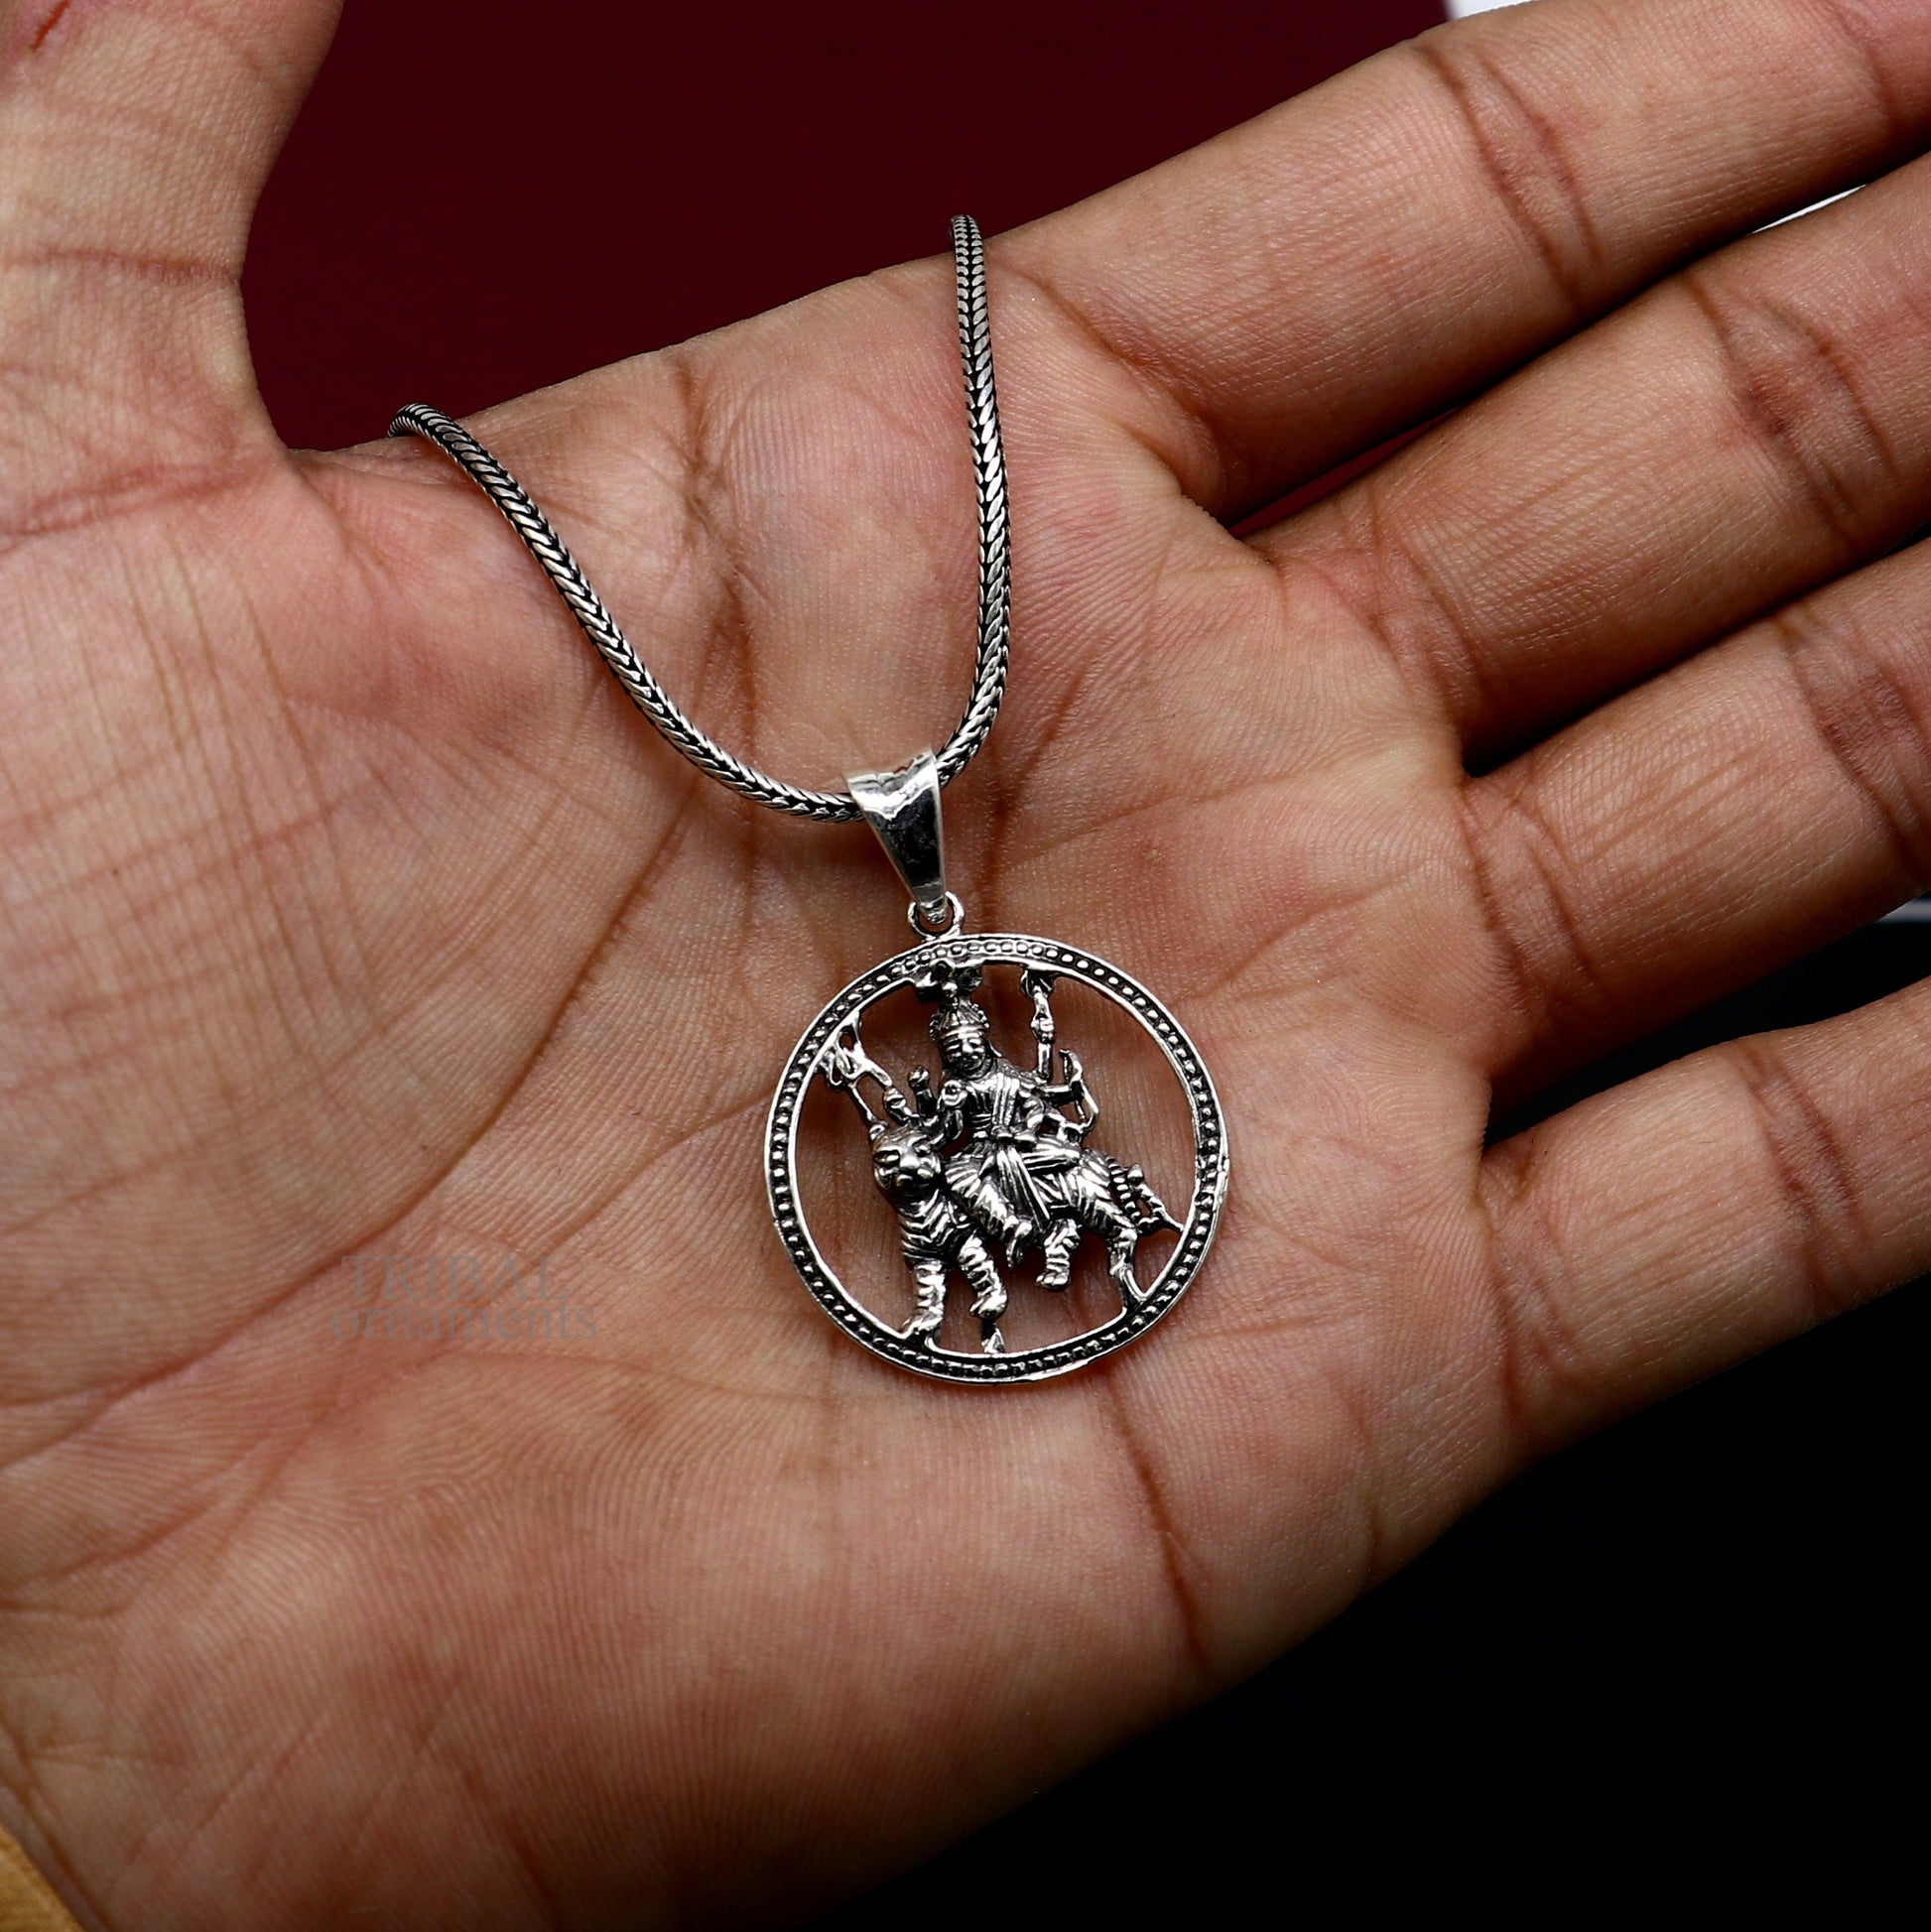 Divine 925 sterling silver Goddess bhawani/ Durga mataji with lion pendant, amazing unisex pendant locket goddess tribal jewelry ssp1560 - TRIBAL ORNAMENTS